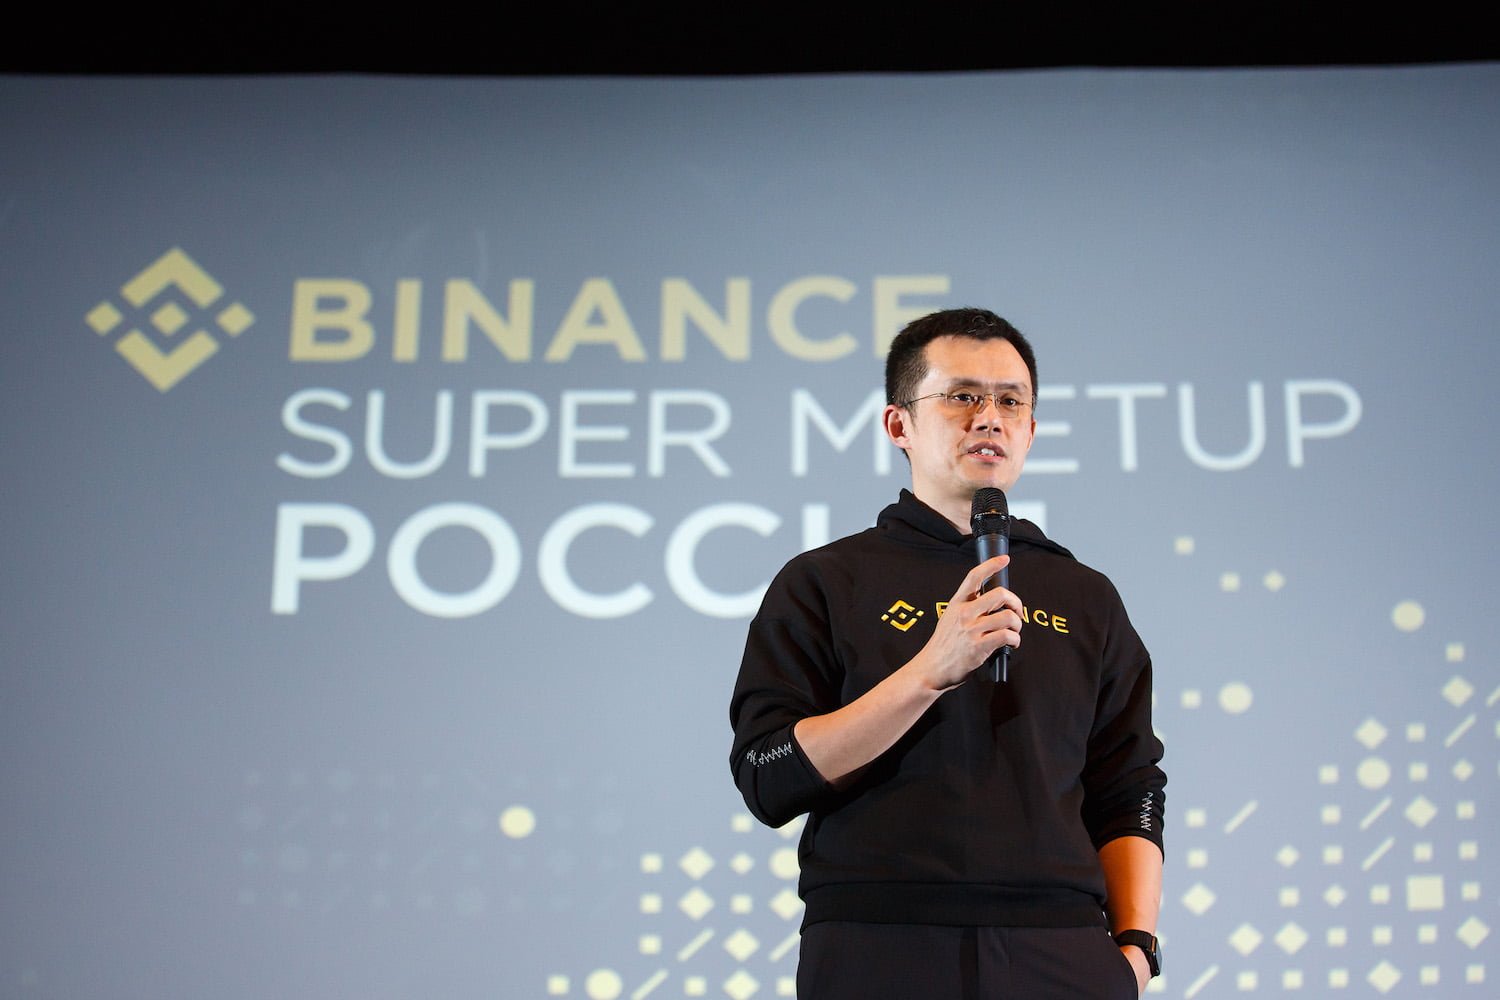 Binance CEO warns crypto Investors ahead of bull run  4